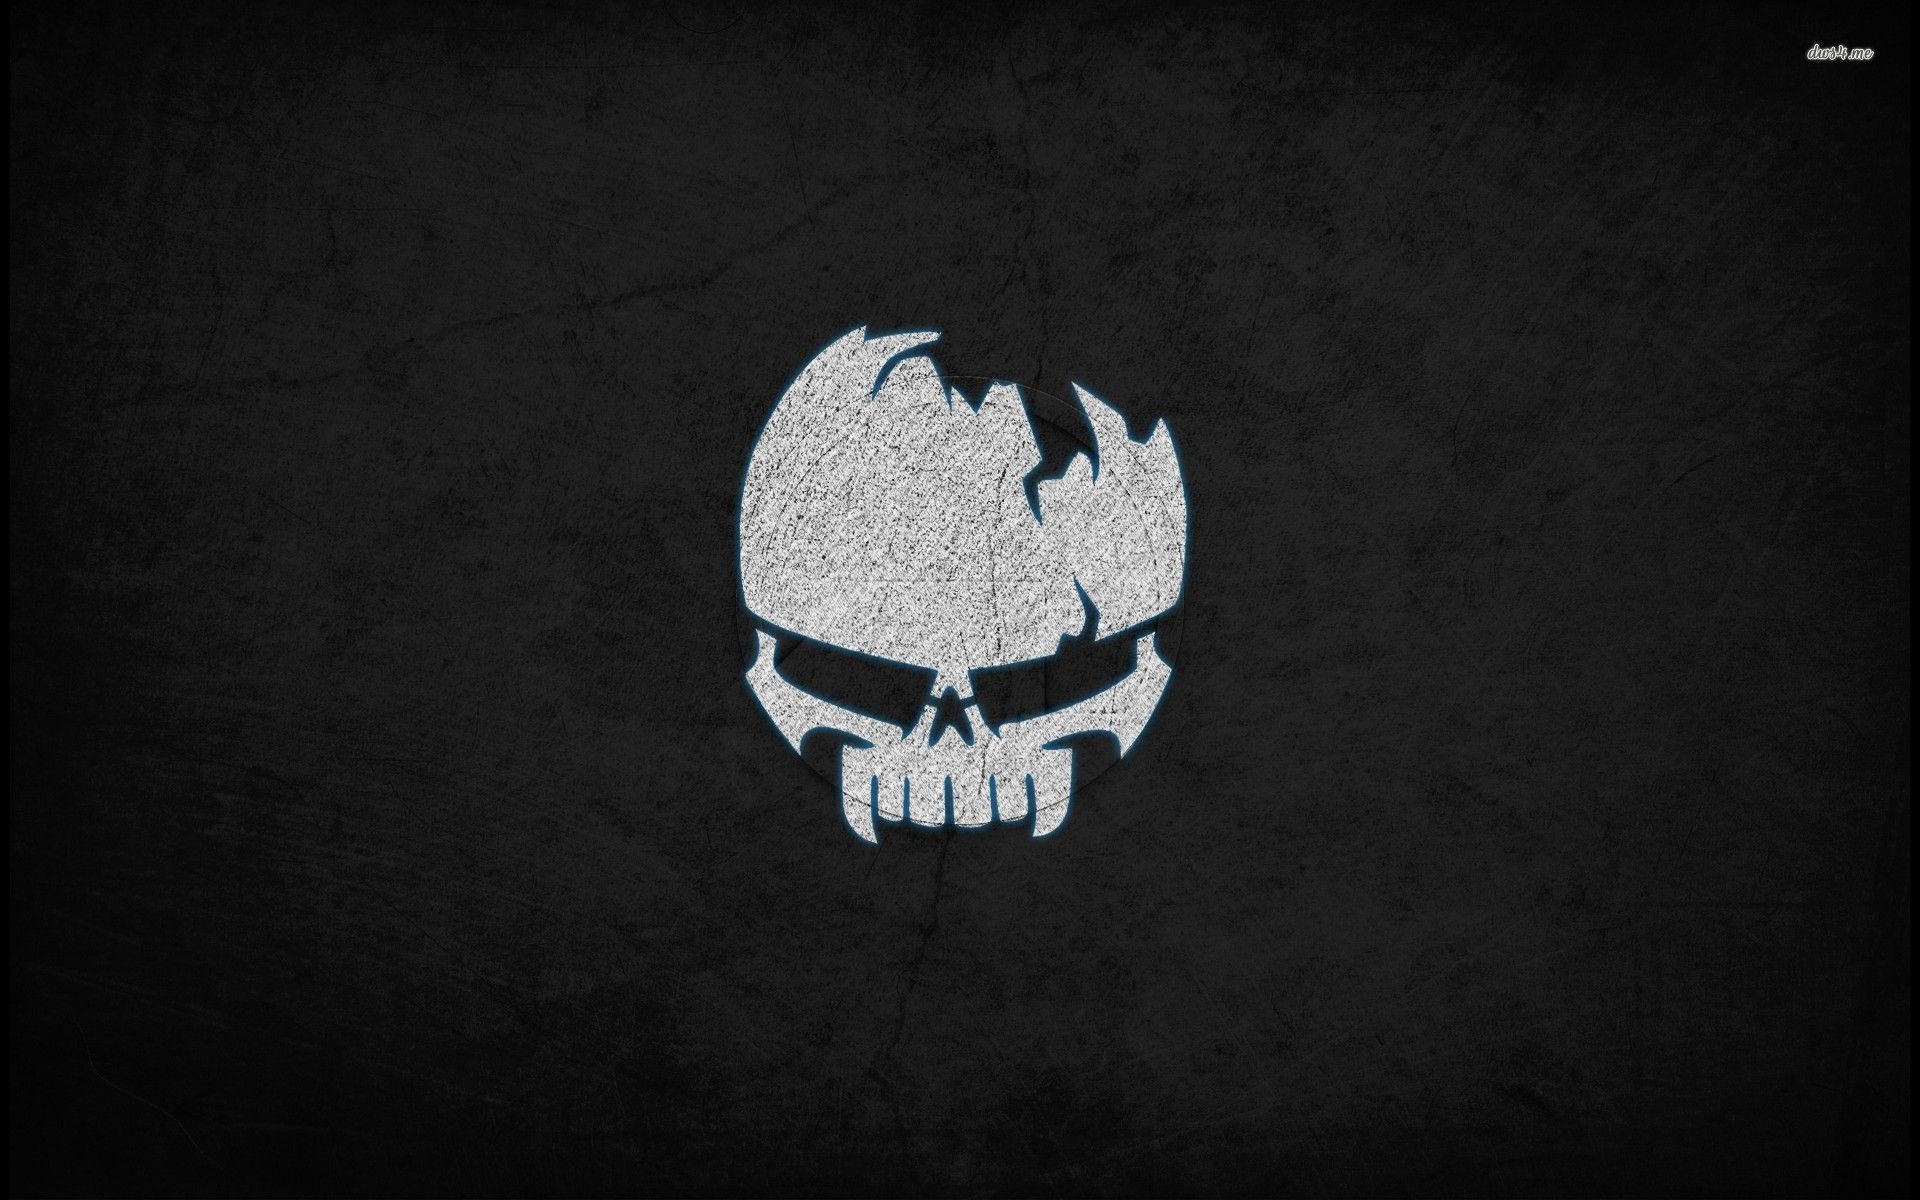 Free download Skull wallpaper Vector wallpaper 21051 [1920x1200] for your Desktop, Mobile & Tablet. Explore Ghost Skull PC Wallpaper. HD Skull Wallpaper, Free Skull Wallpaper, Skull Wallpaper For Desktop